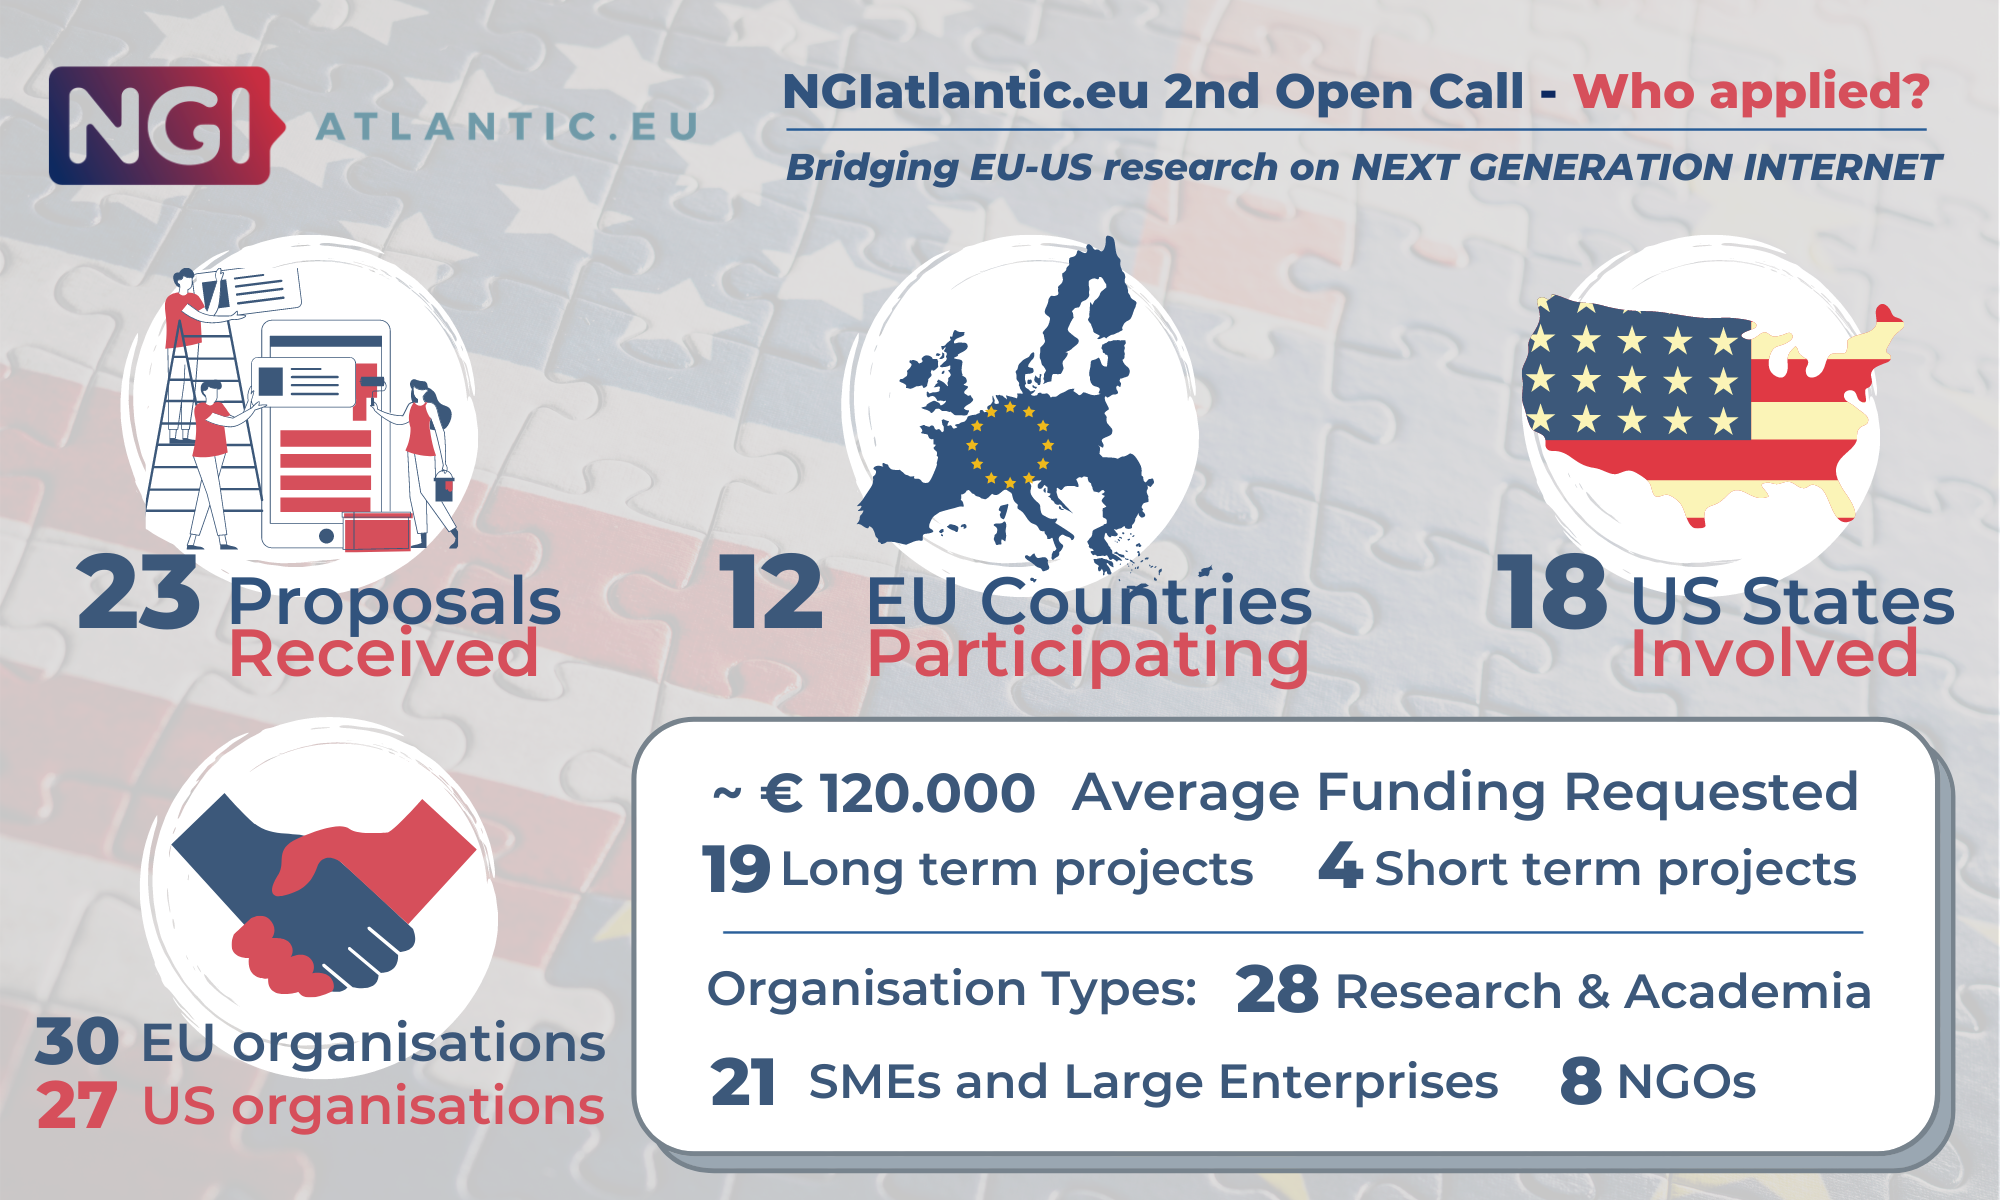 NGIatlantic.eu 2nd Open Call Insight